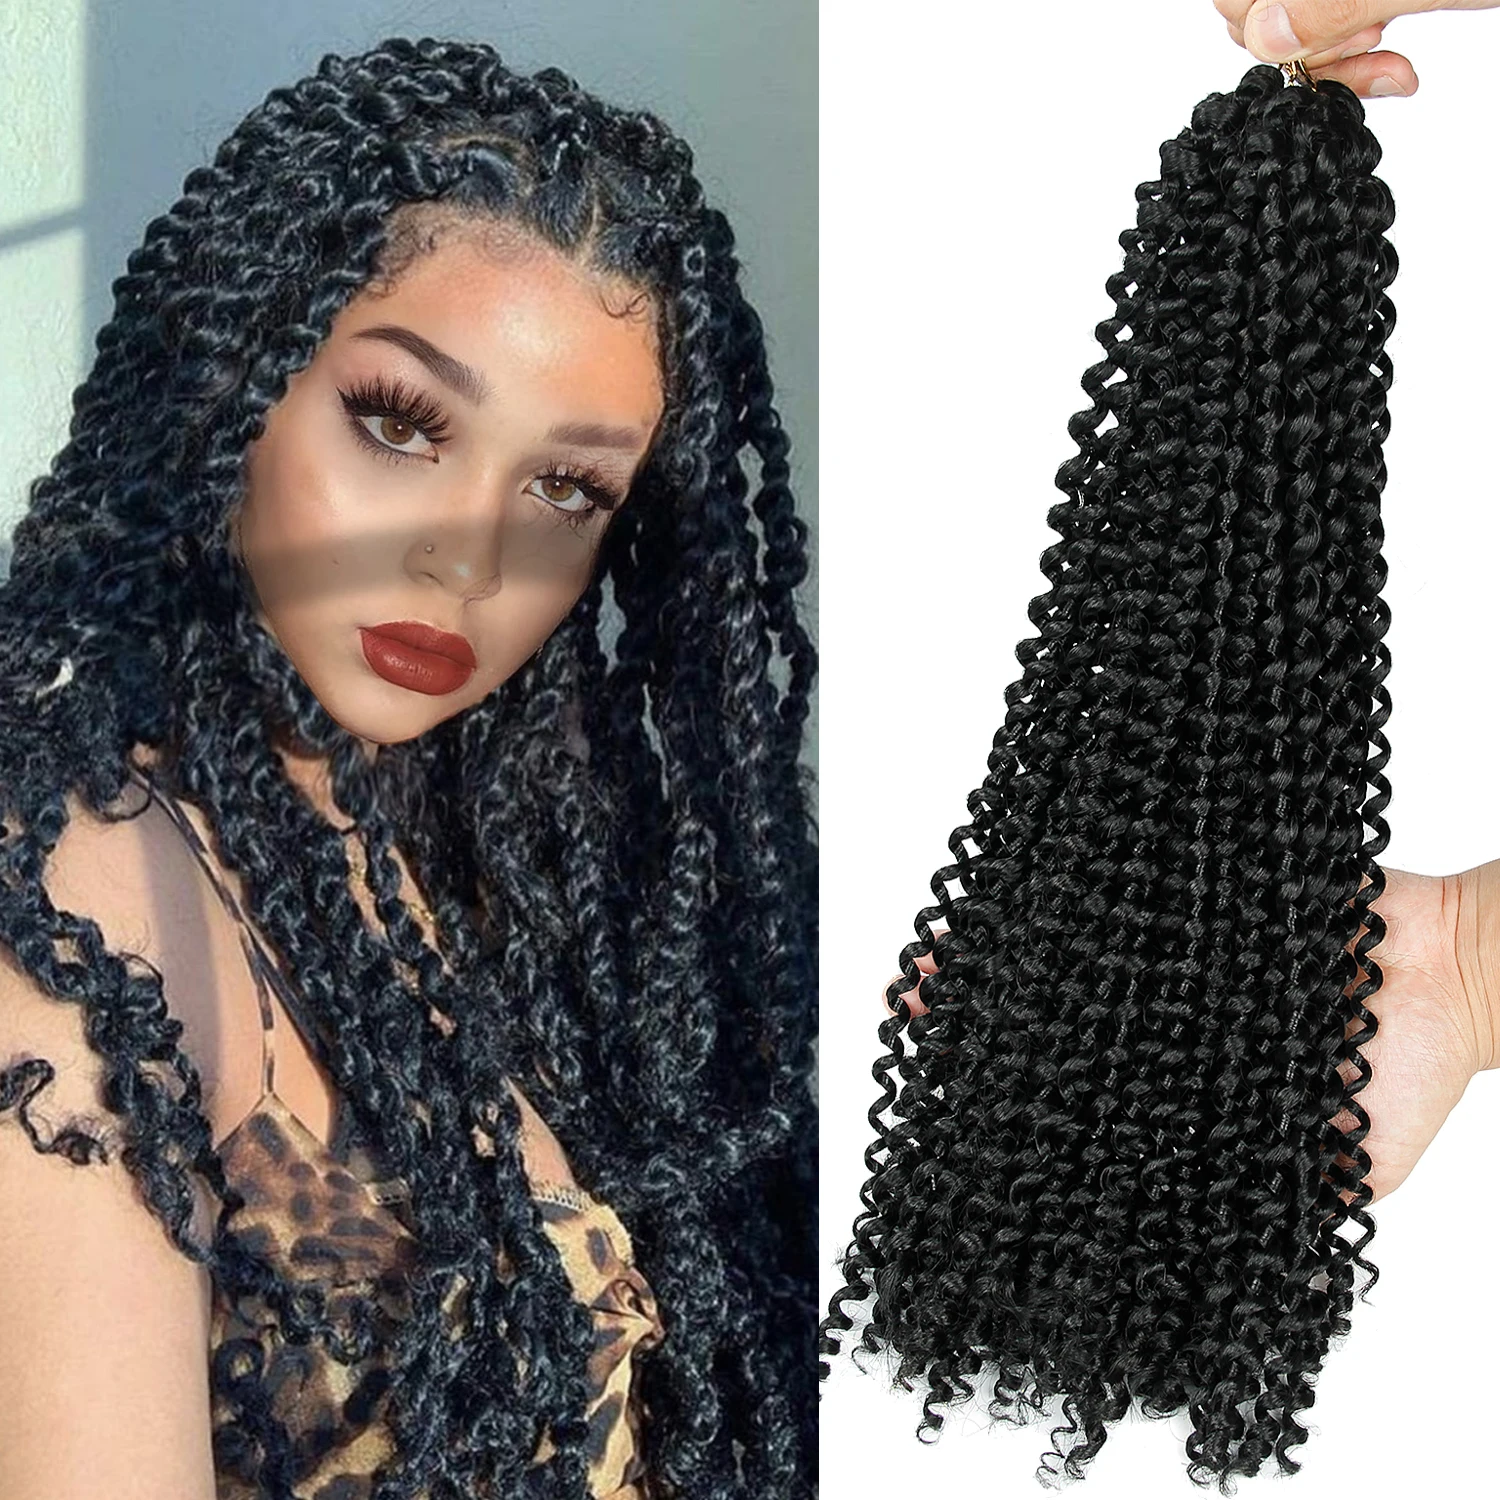 

18'' Crochet Braid Hair For Braiding Synthetic Hair Extension Passion Twist Long Bohemian Curly Crochet Hair, 1b #4 #27 #30 t27;t30;t350;tbug